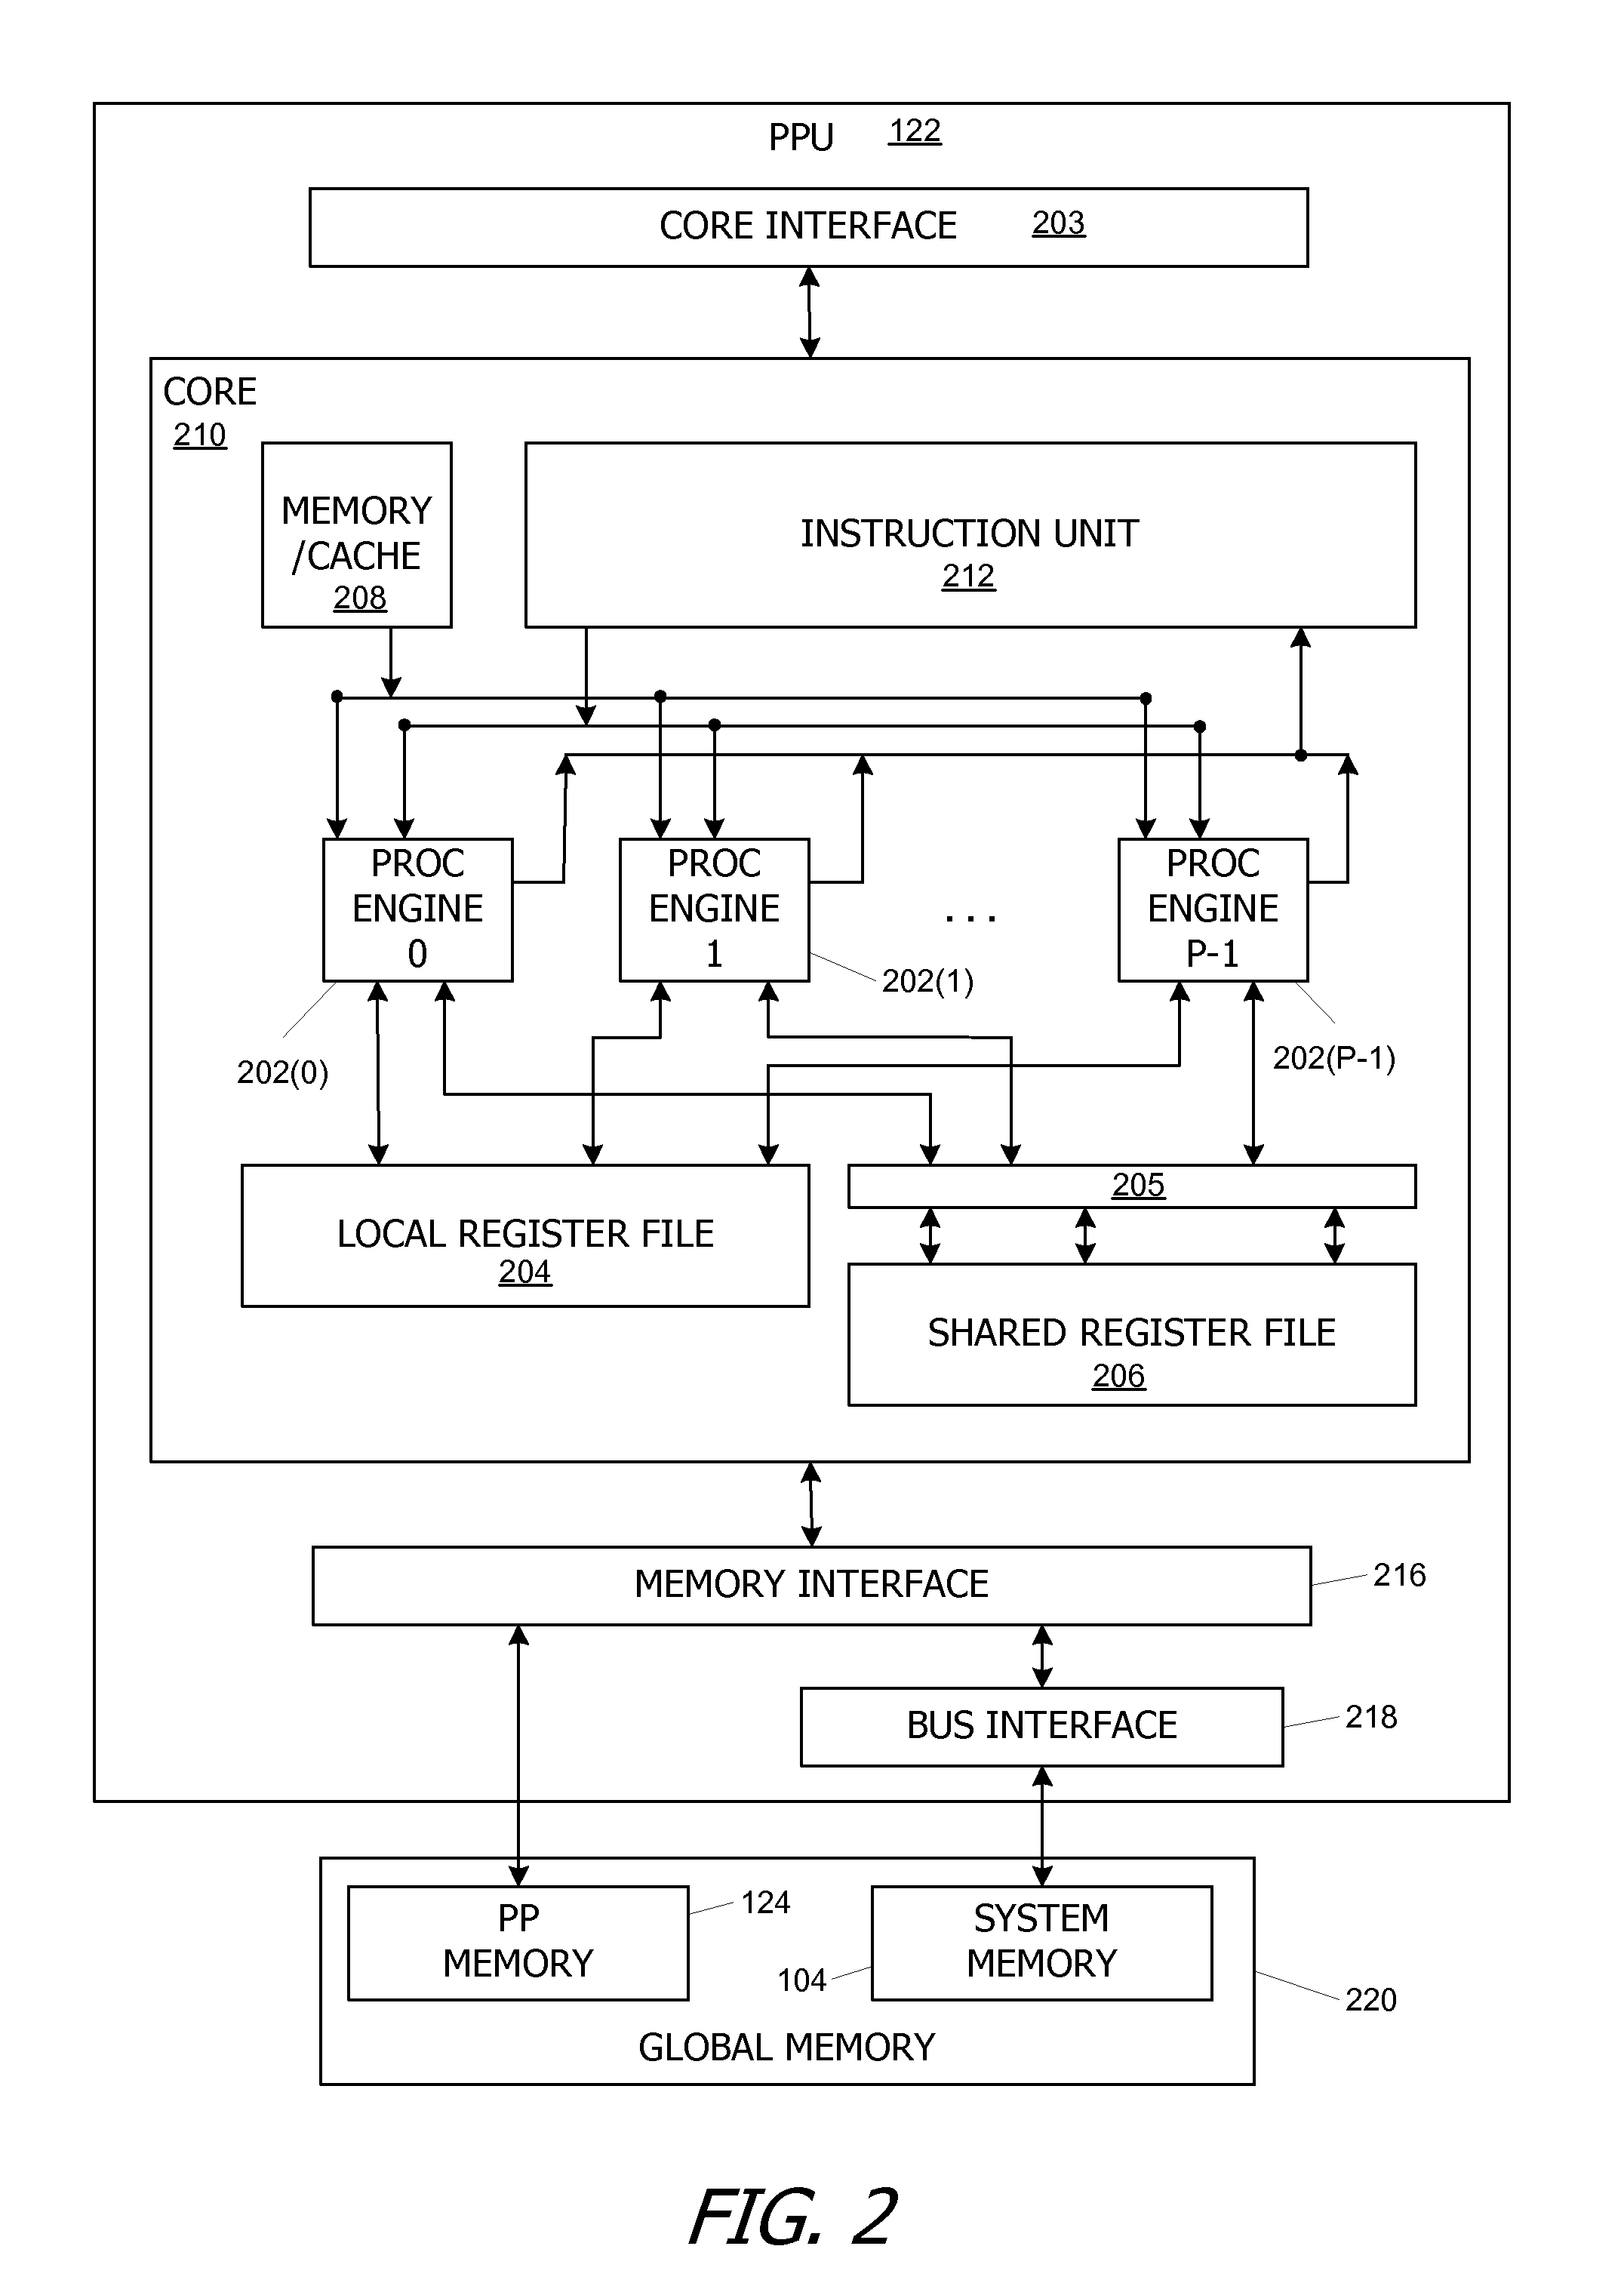 Bit reversal methods for a parallel processor